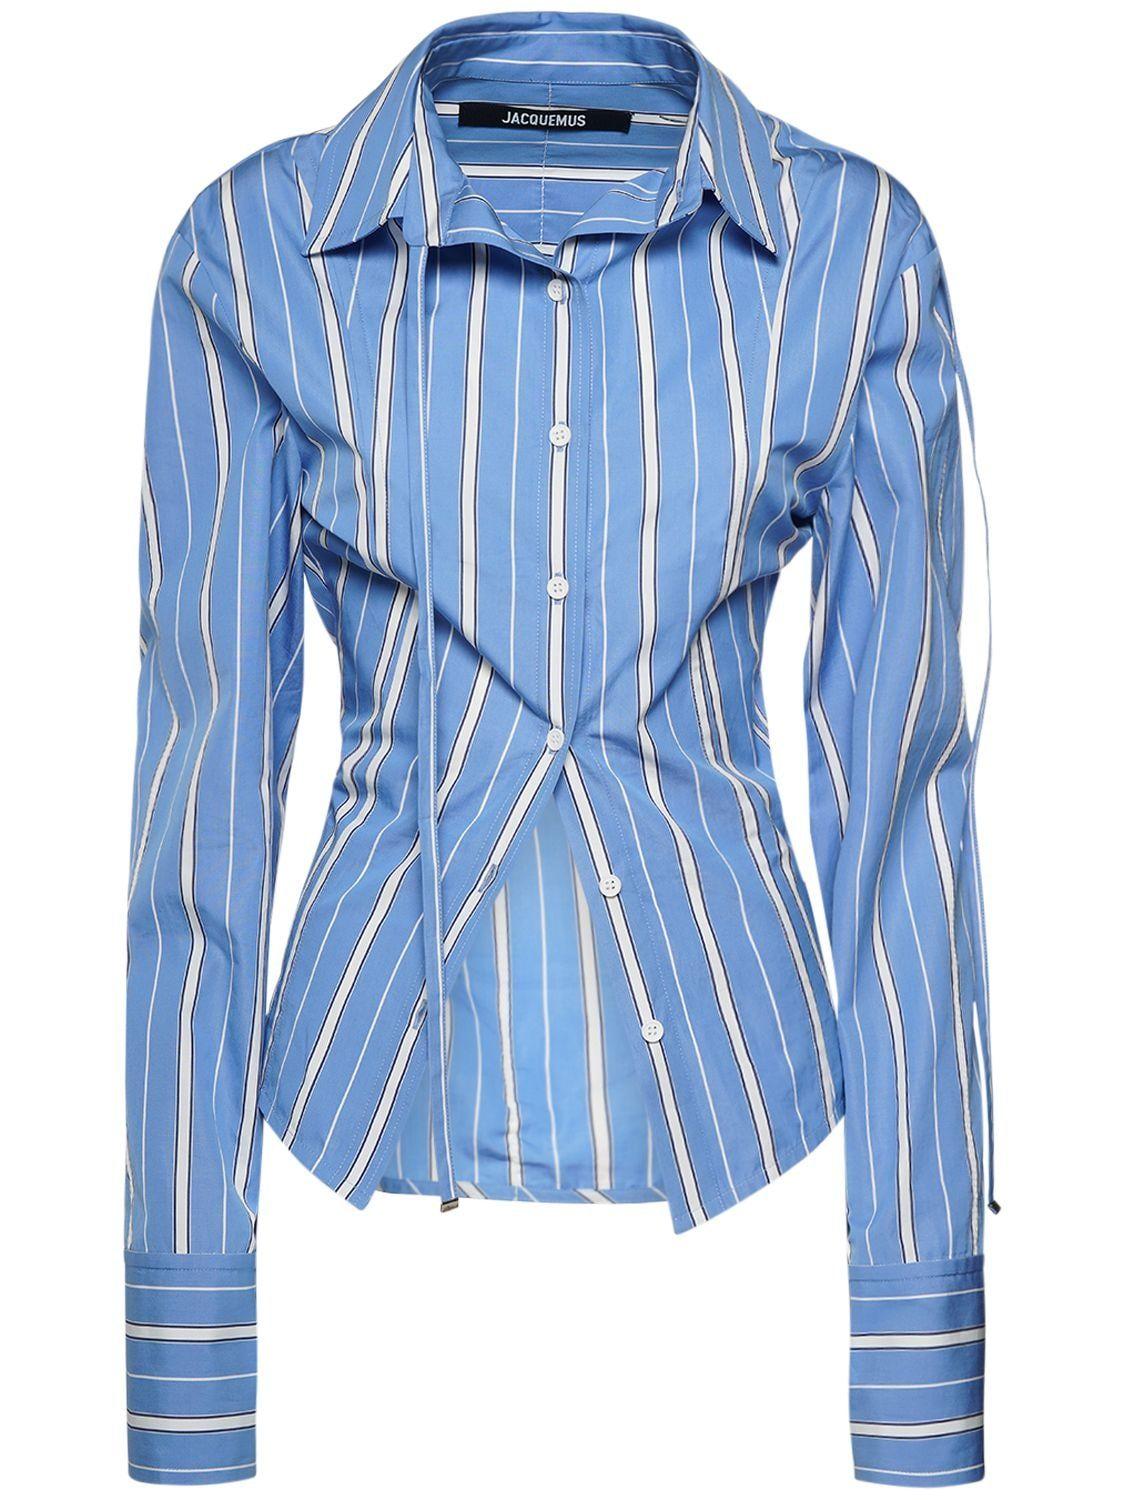 Jacquemus La Chemise Ruban Striped Cotton Shirt in Blue | Lyst